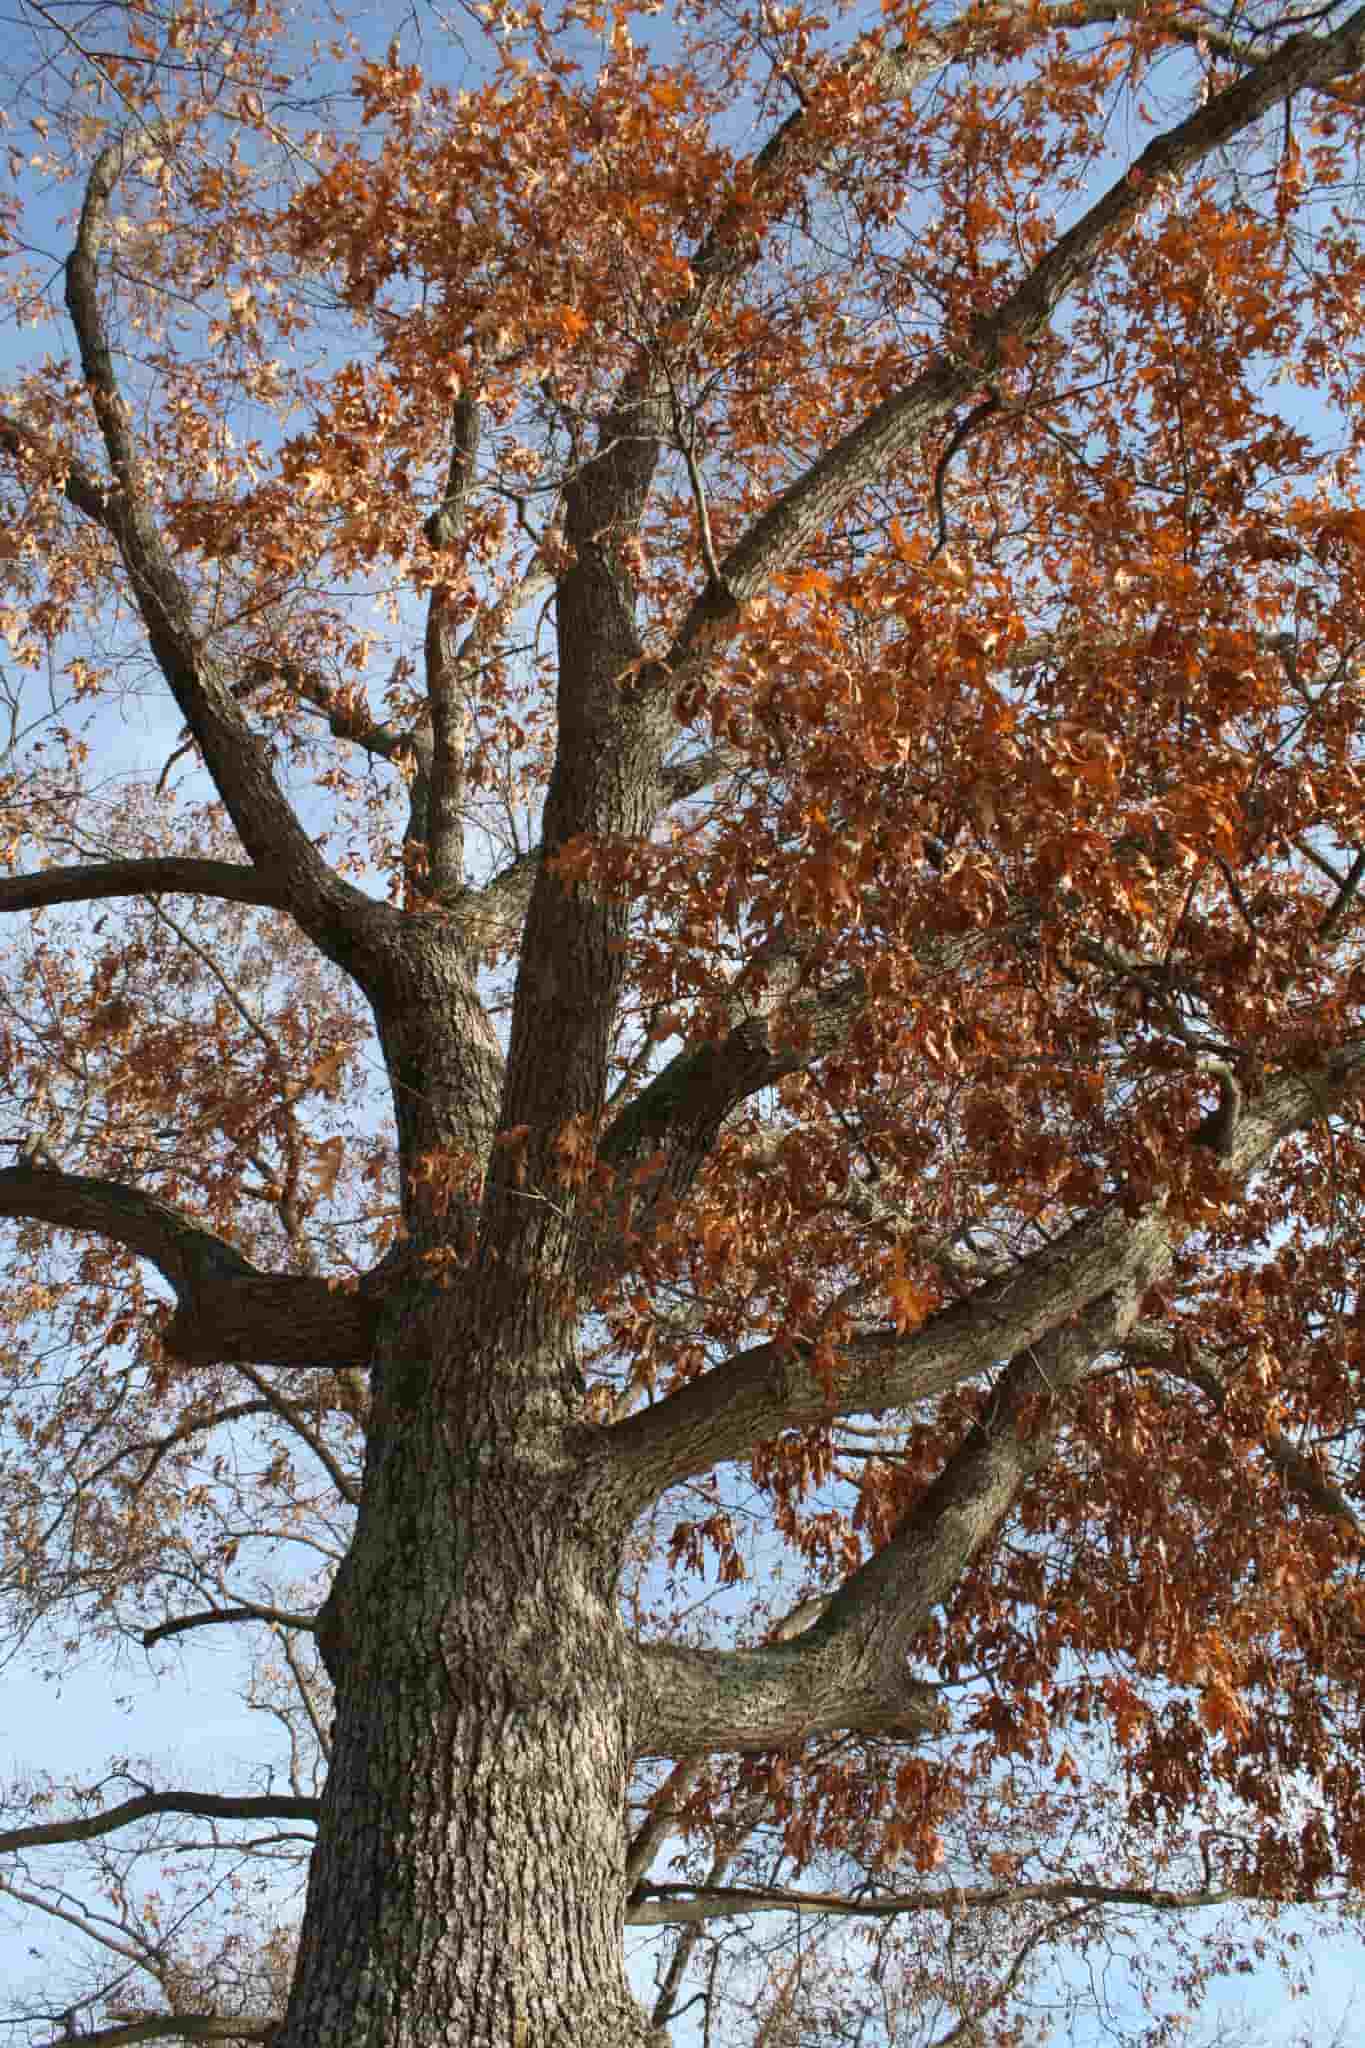 Cherrybark Oak in Fall